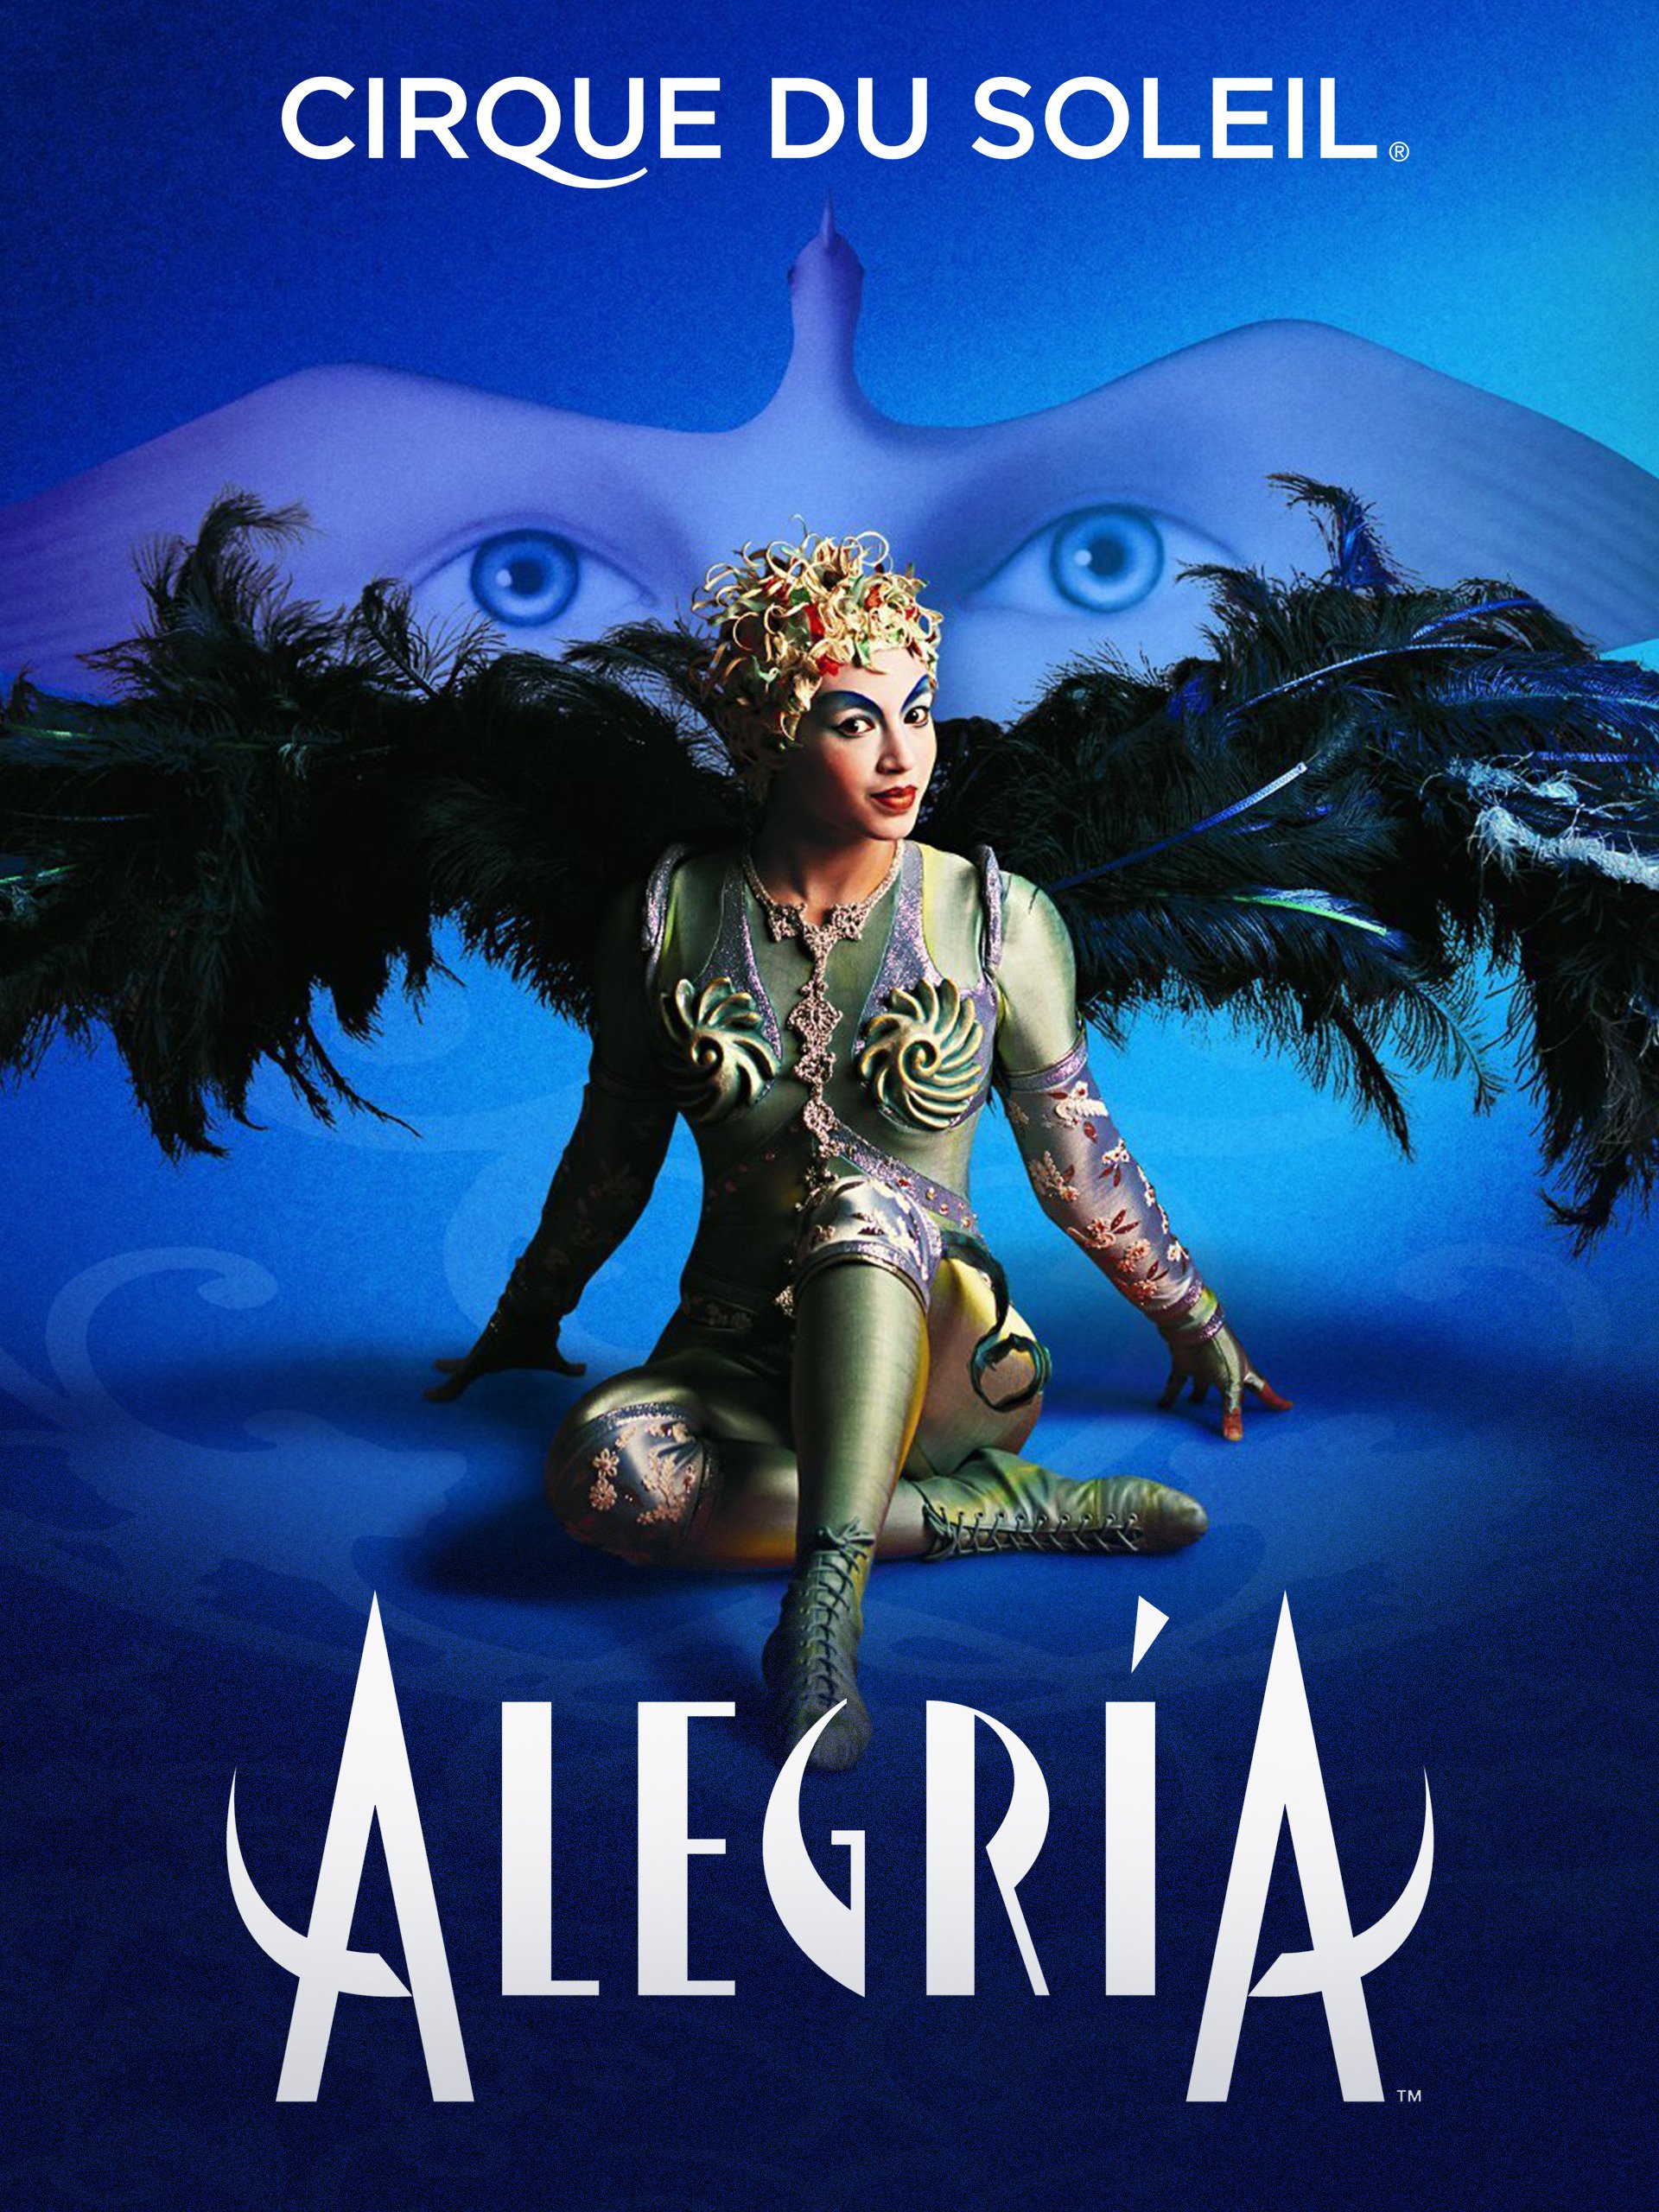 Stiahni si Filmy DVD Slnecny cirkus - Alegria / Cirque du Soleil: Alegria (2001)(EN) = CSFD 90%